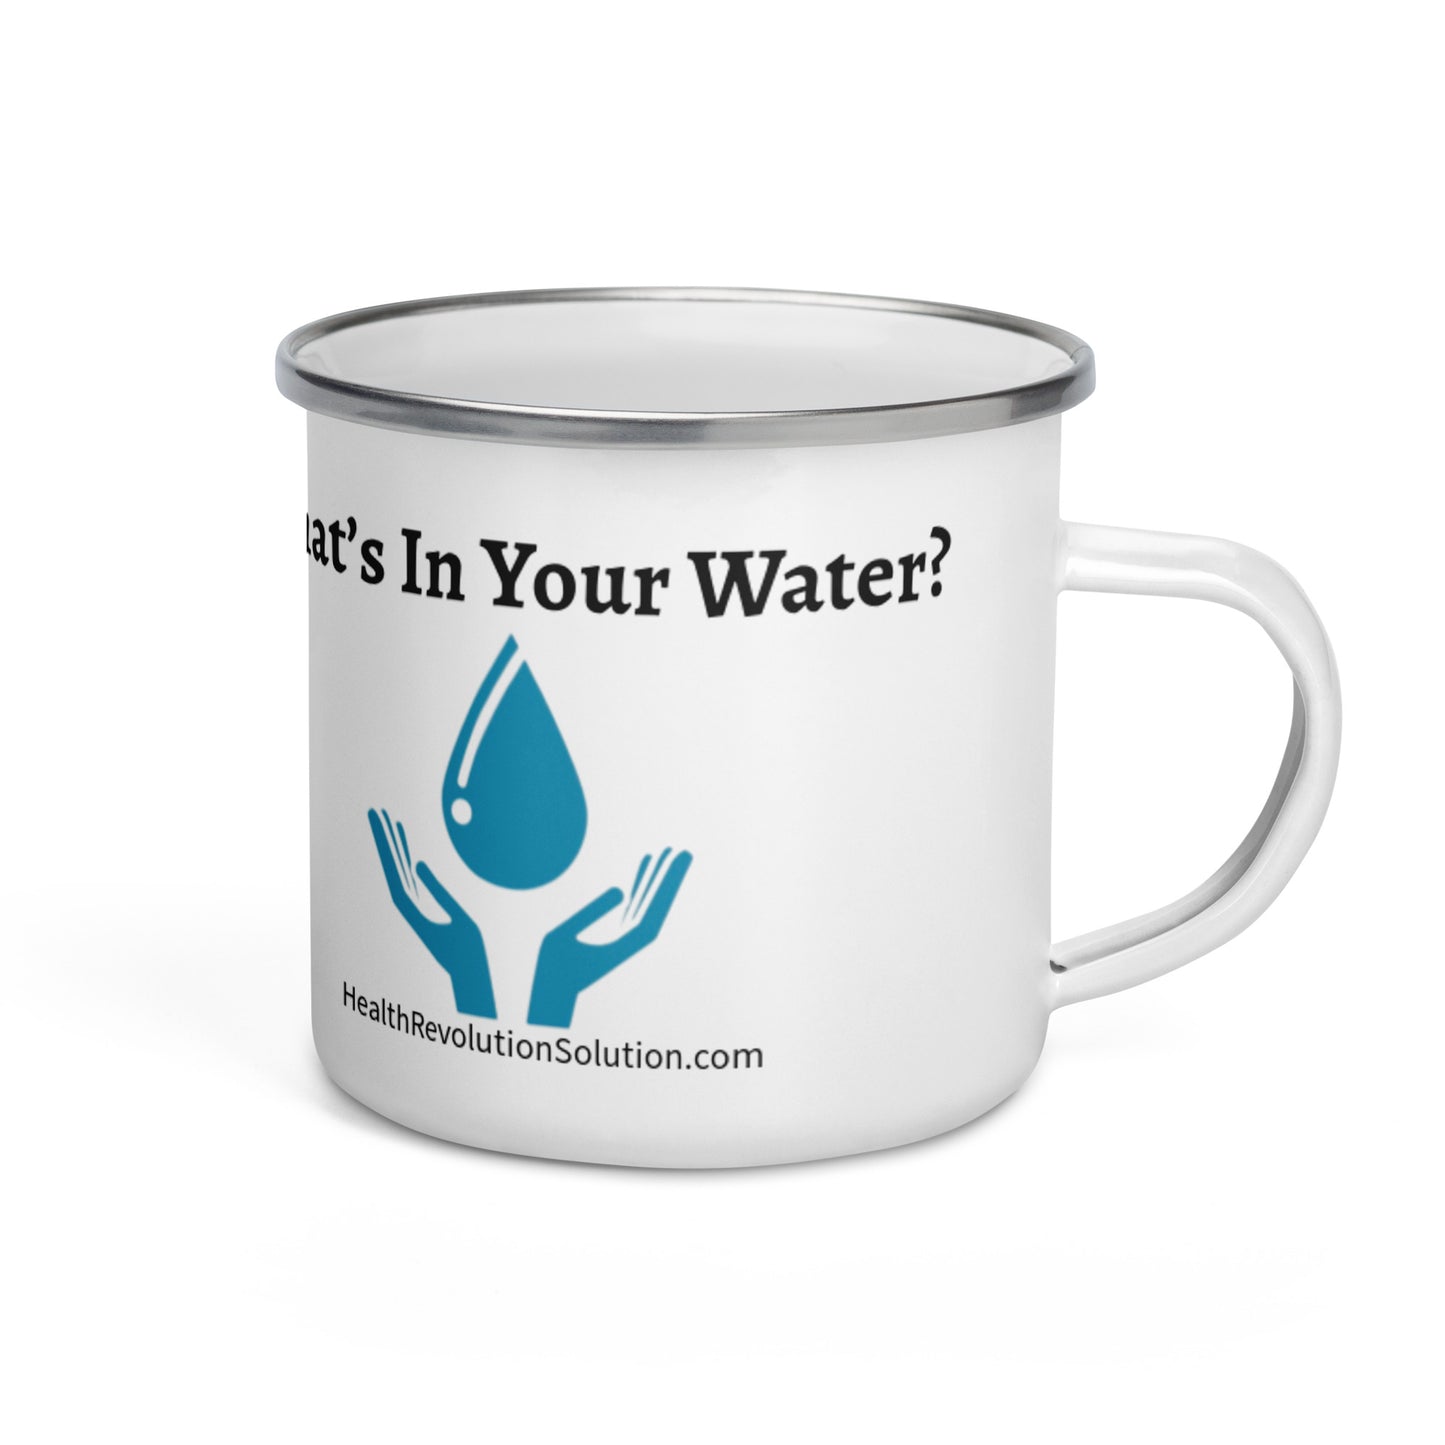 “What’s In Your Water?” Enamel Mug